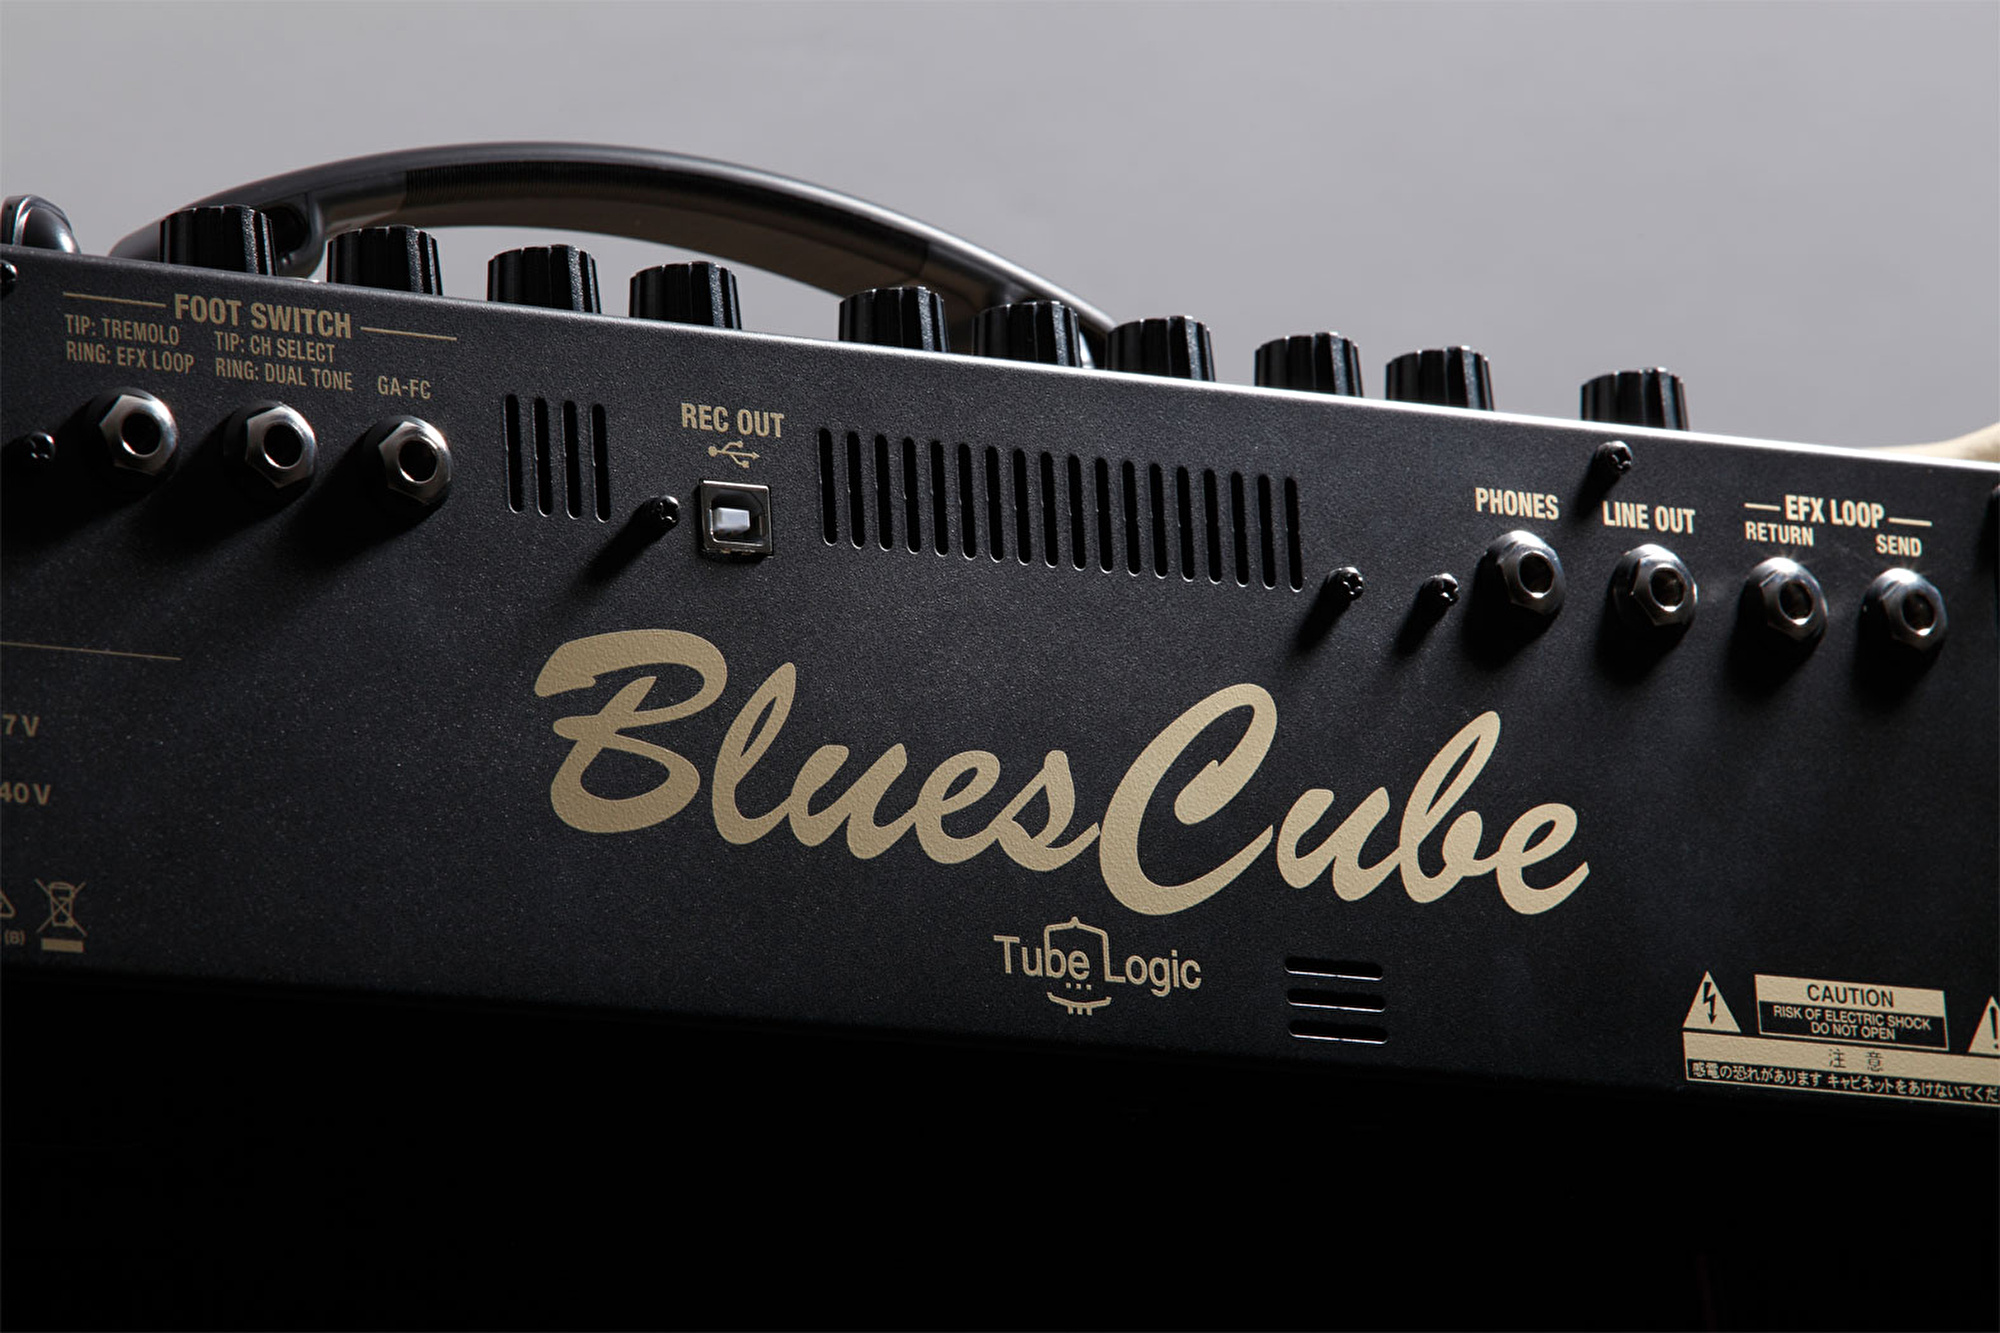 Blues cube